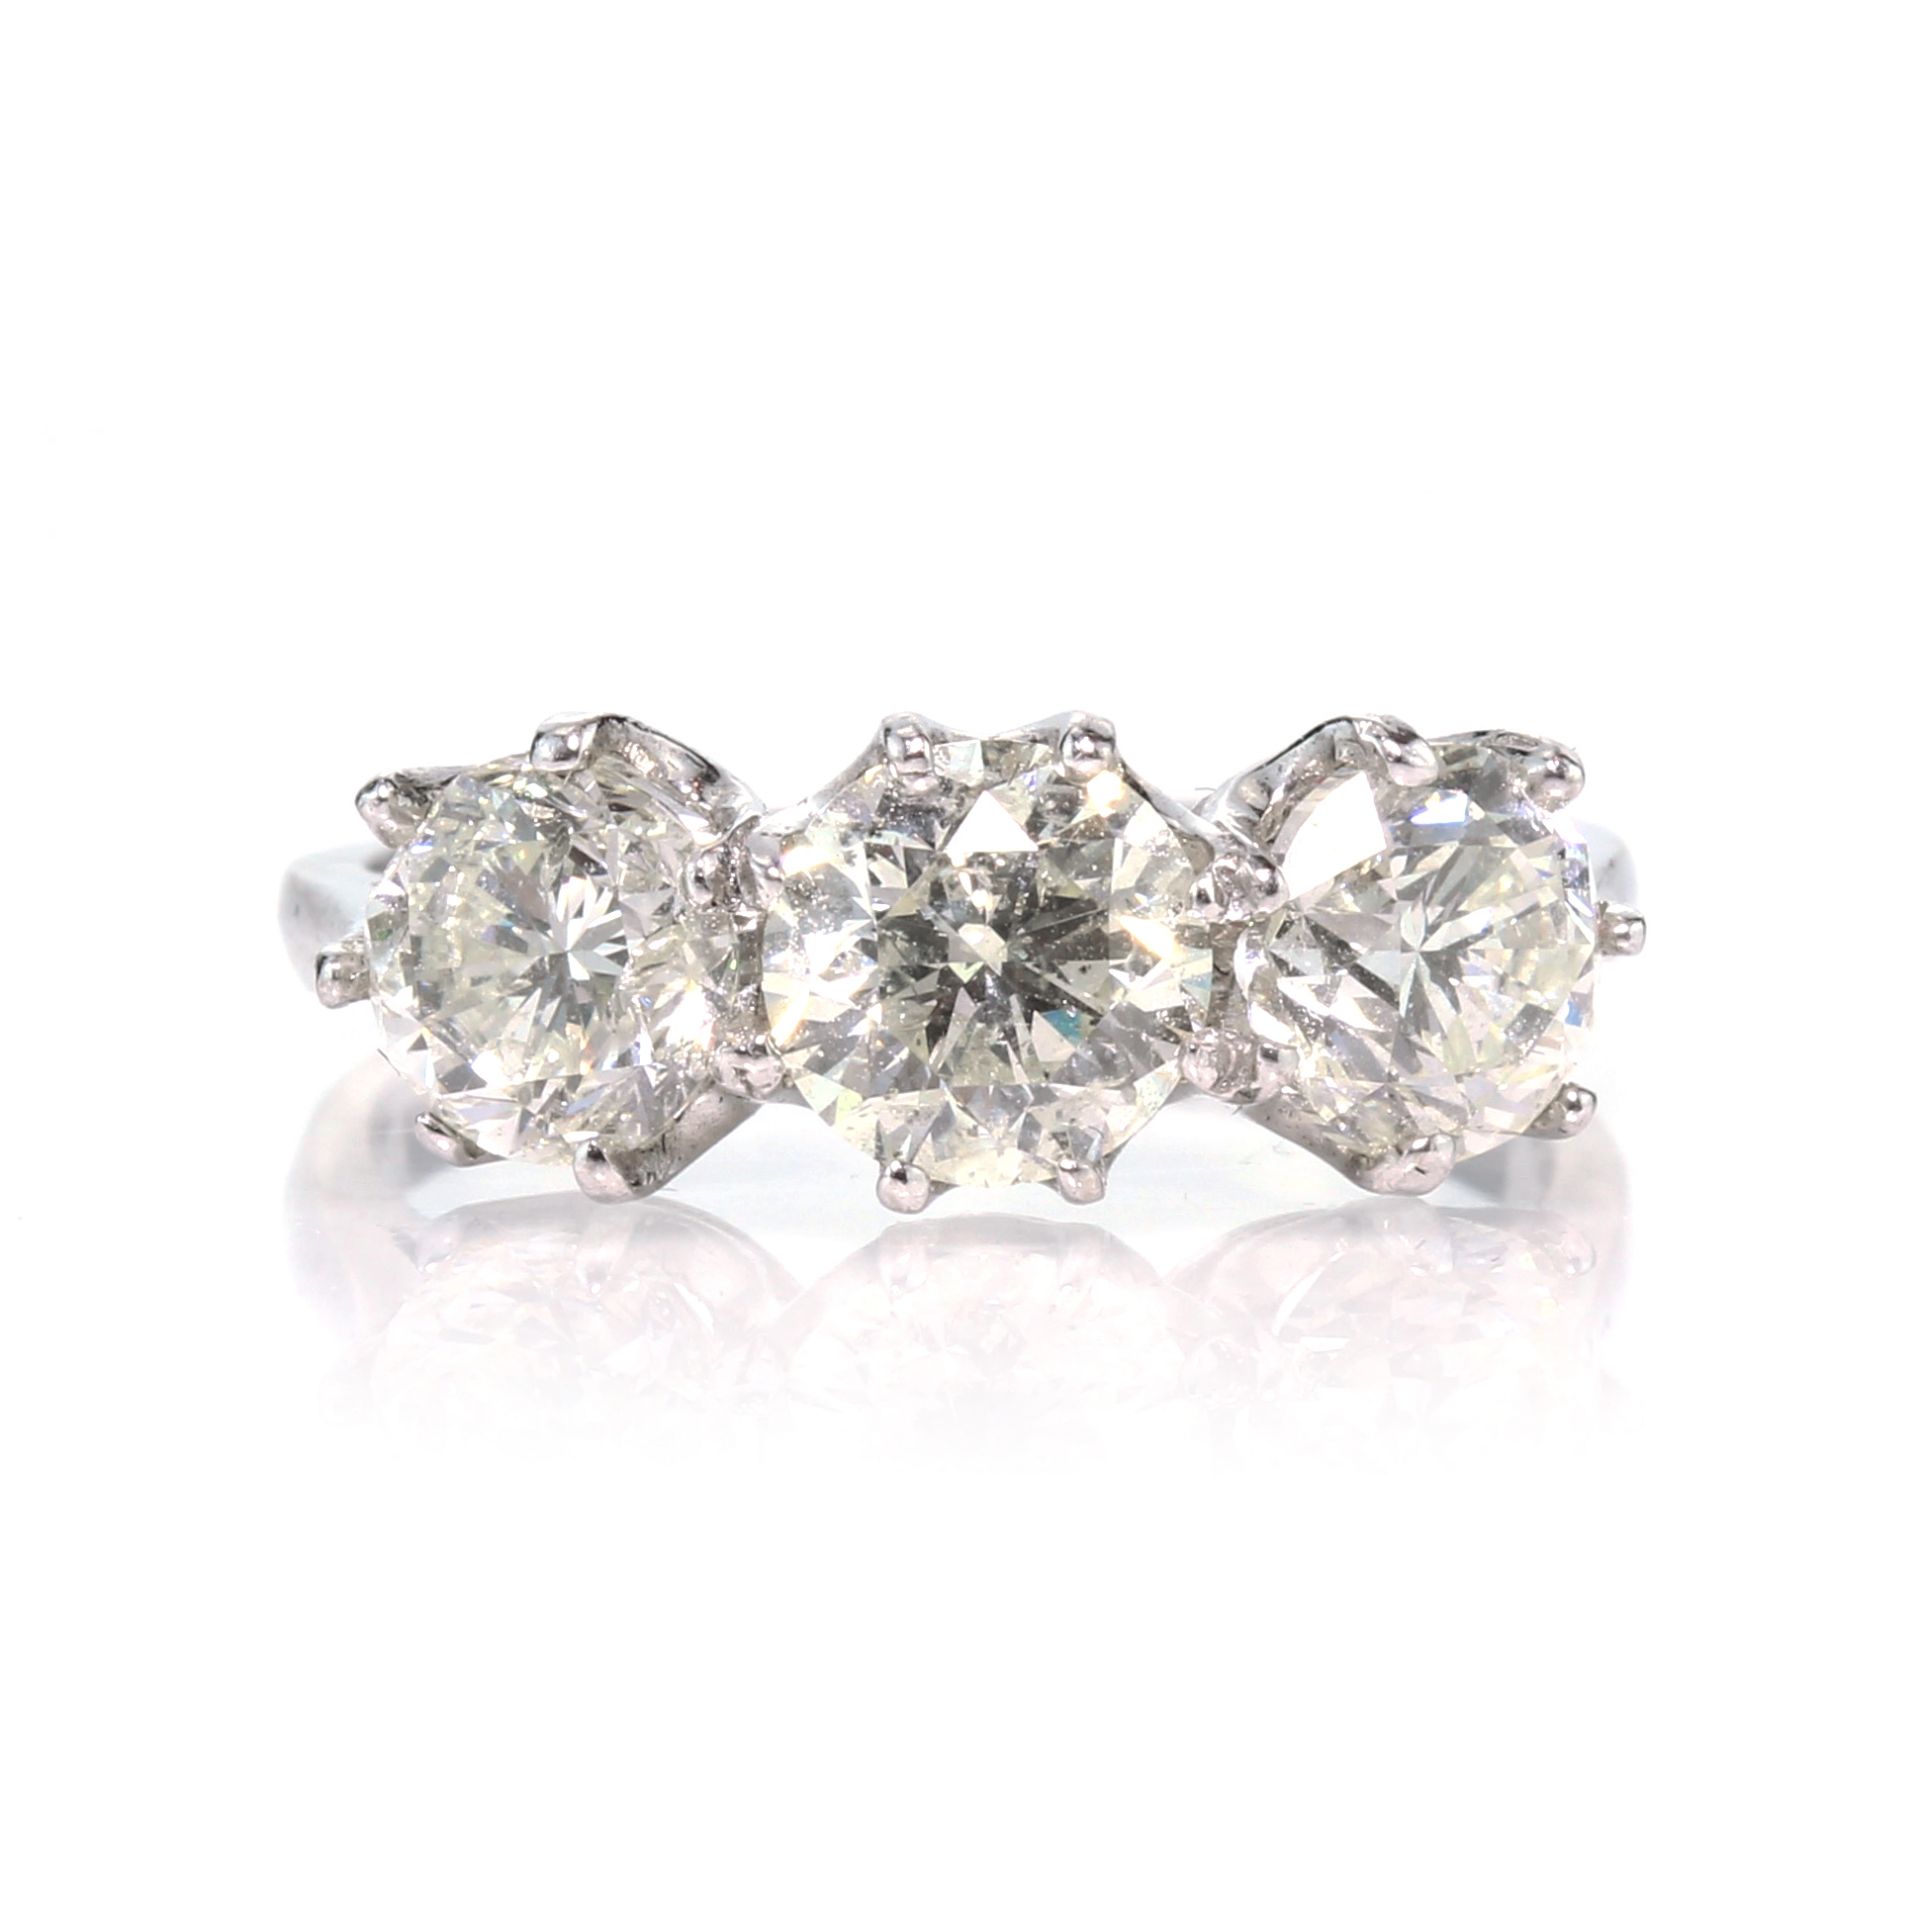 A diamond three stone dress ring in 18ct white gold set with three graduated round cut diamonds,